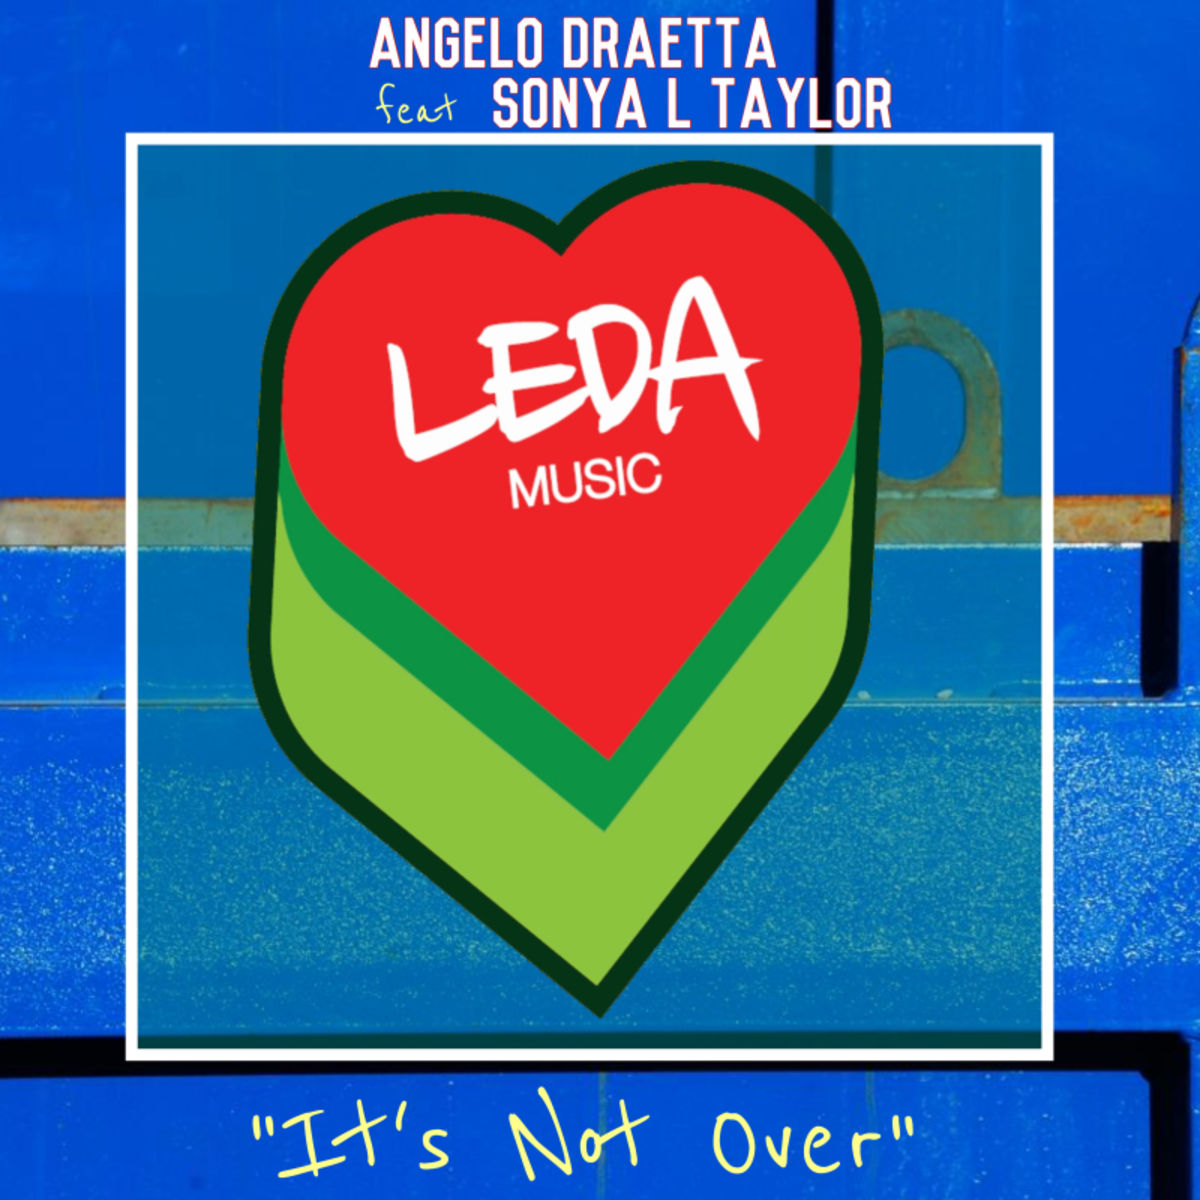 Angelo Draetta ft Sonya L. Taylor - It's Not Over / Leda Music